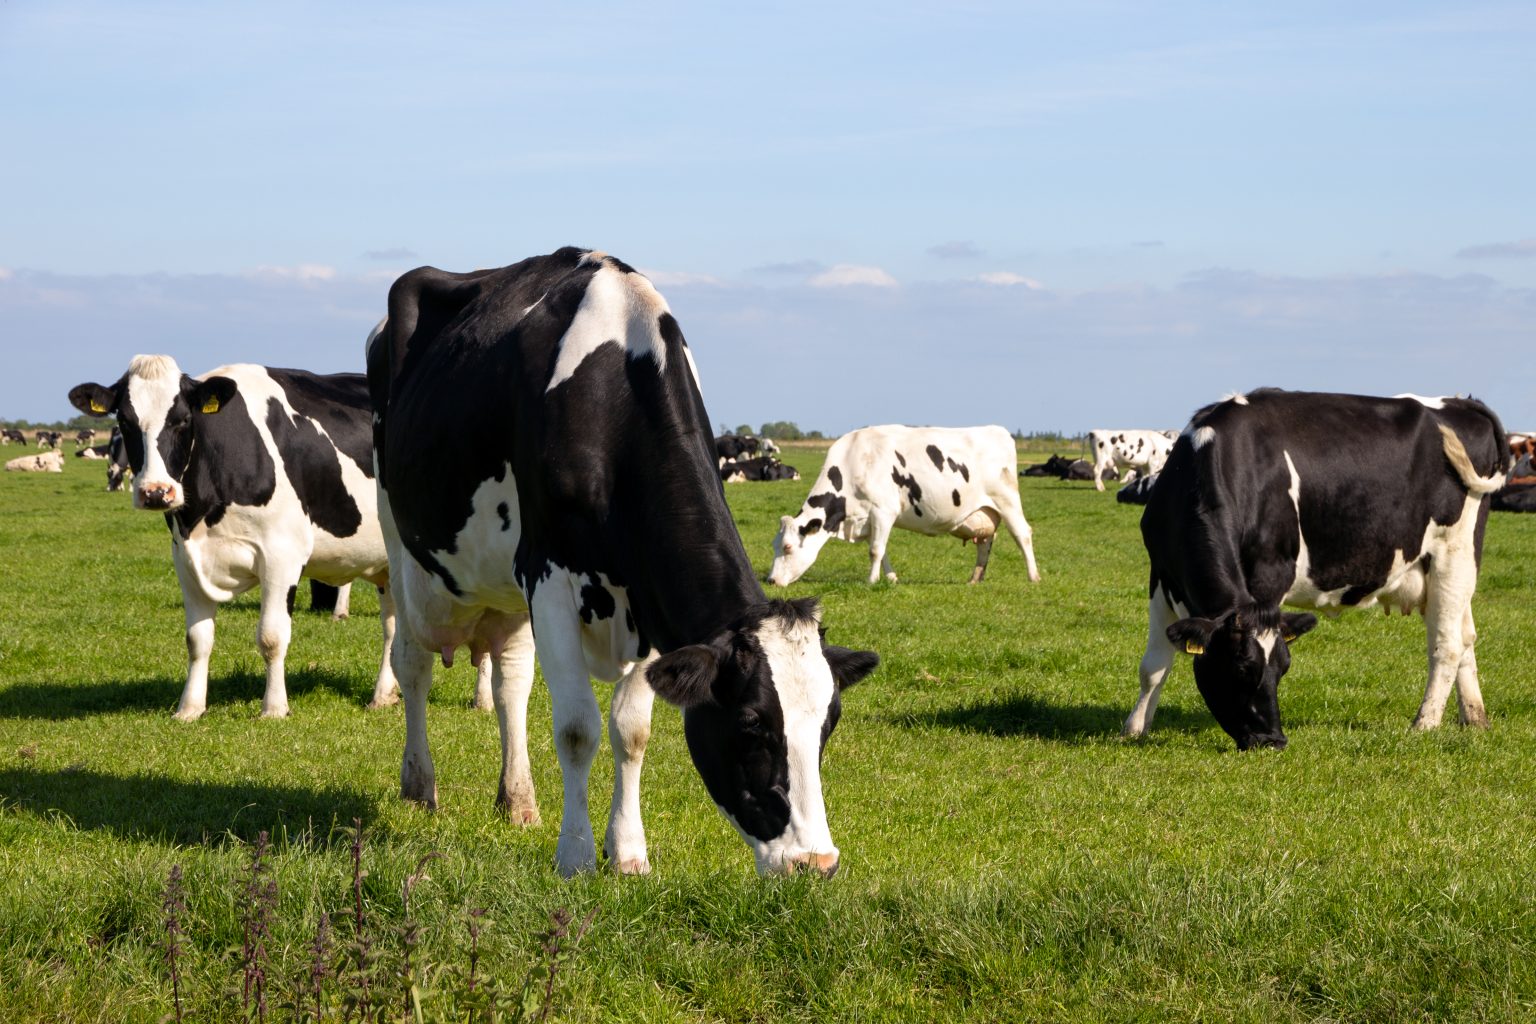 Danone enters partnership to reduce livestock methane emissions